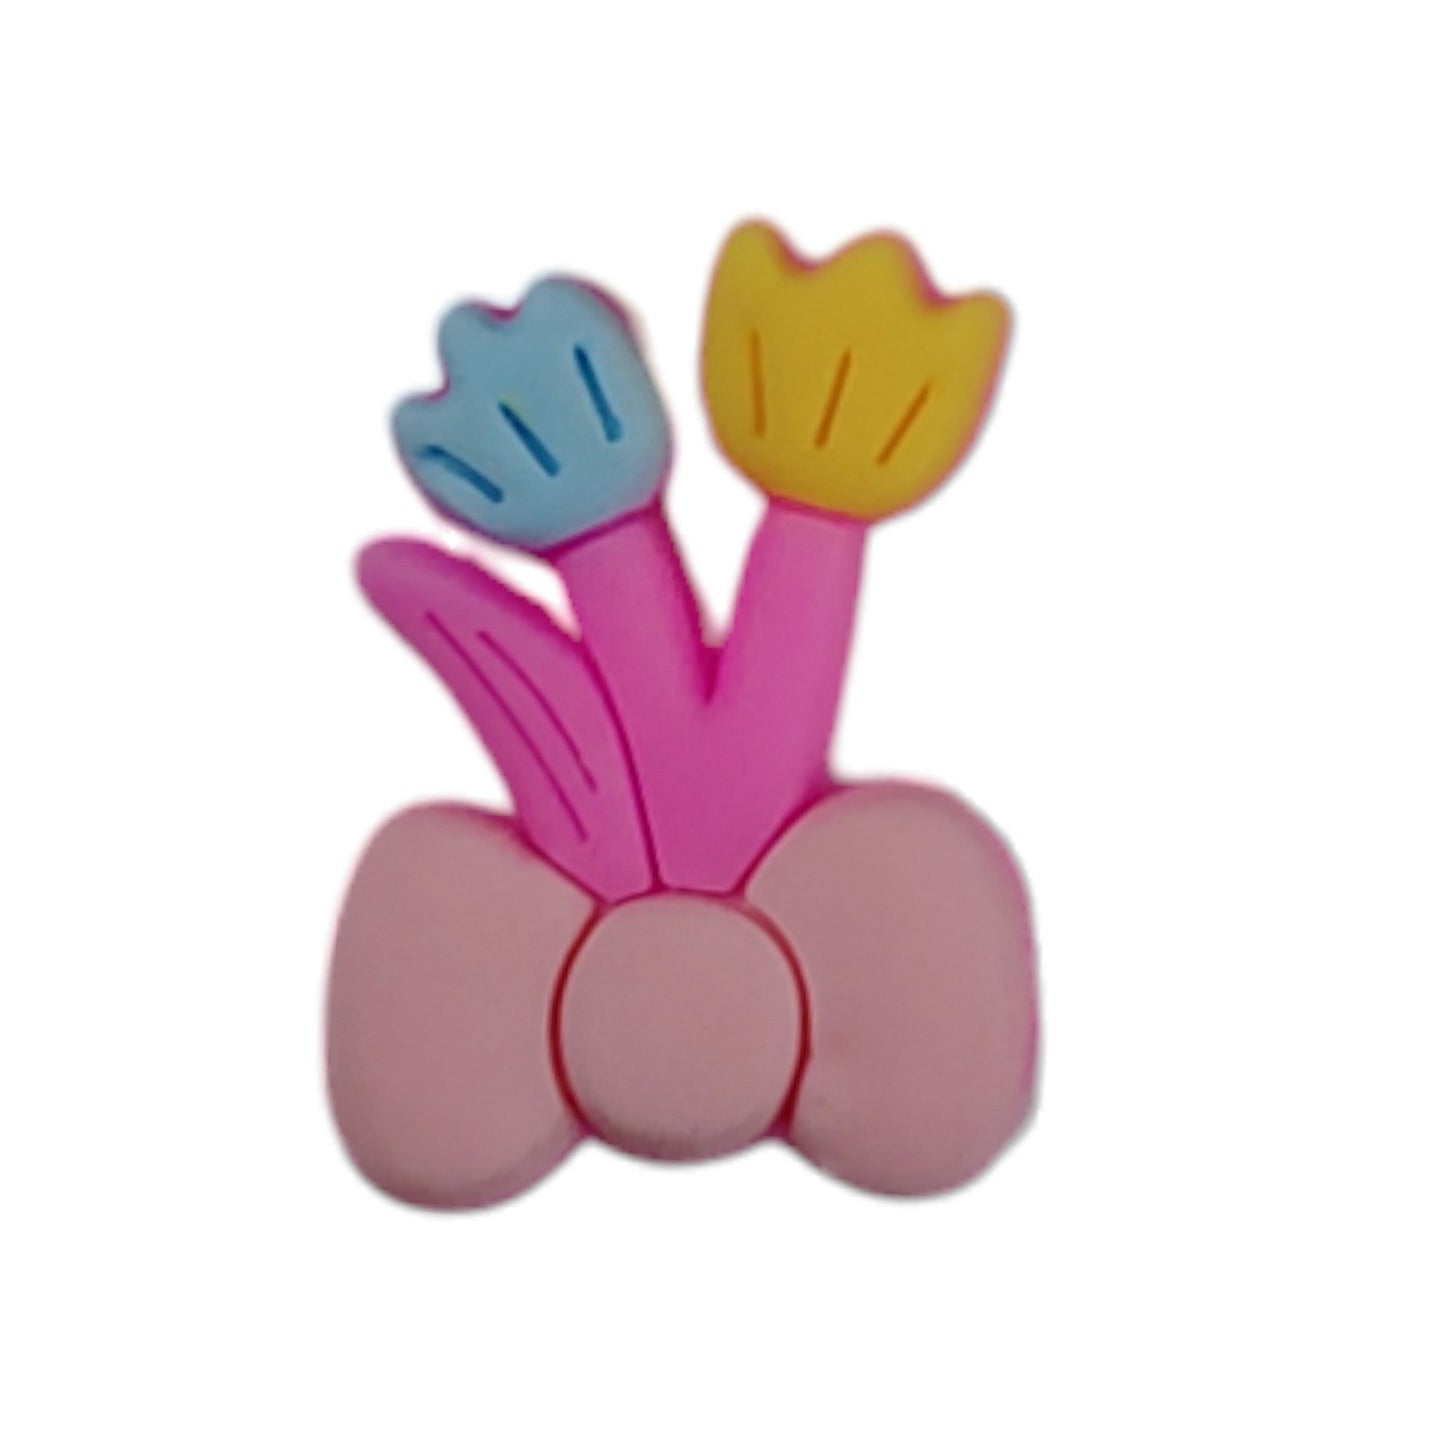 Indian Petals Flower Shap Soft Silicon Resin Mix Motif For Craft Design Or Decoration, 60 Pcs, MIX-13549